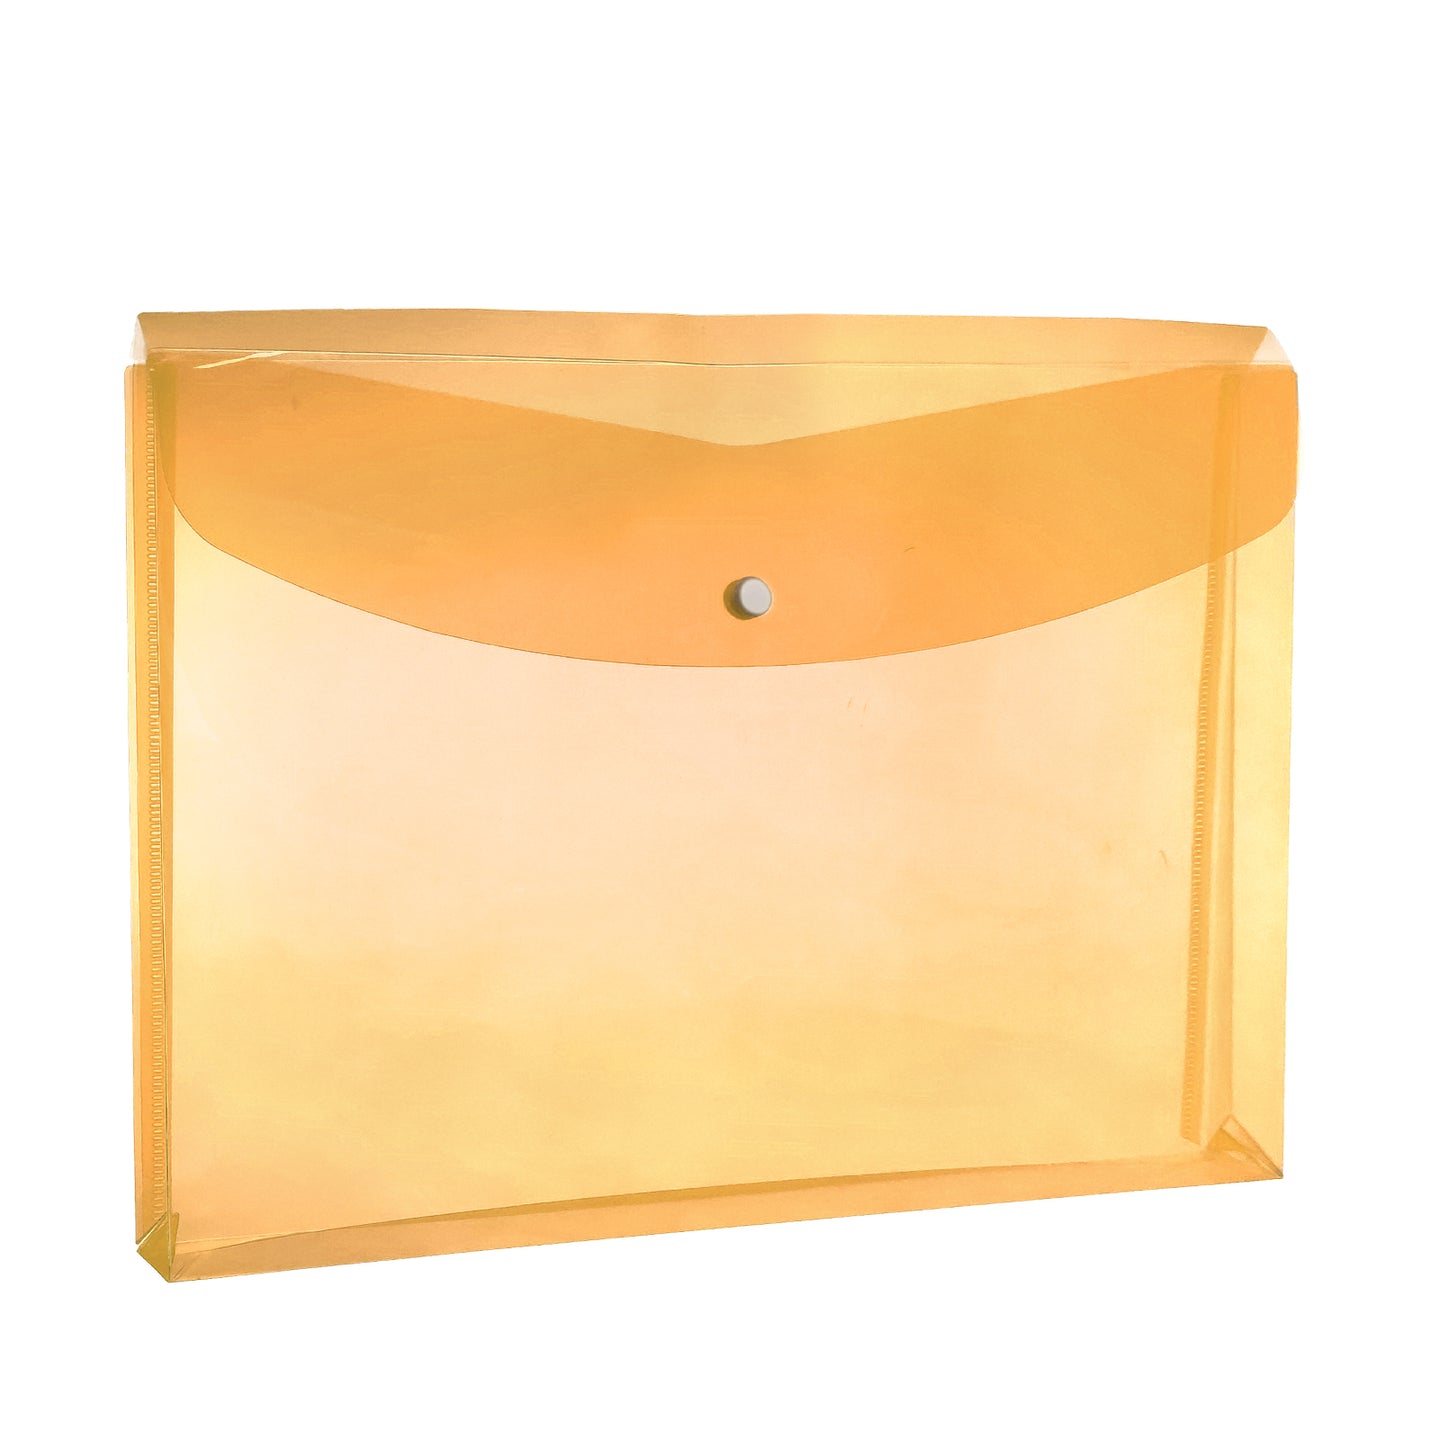 Plastic Envelopes with Snap Closure, Legal Size Expandable Organizition File Folder-Orange